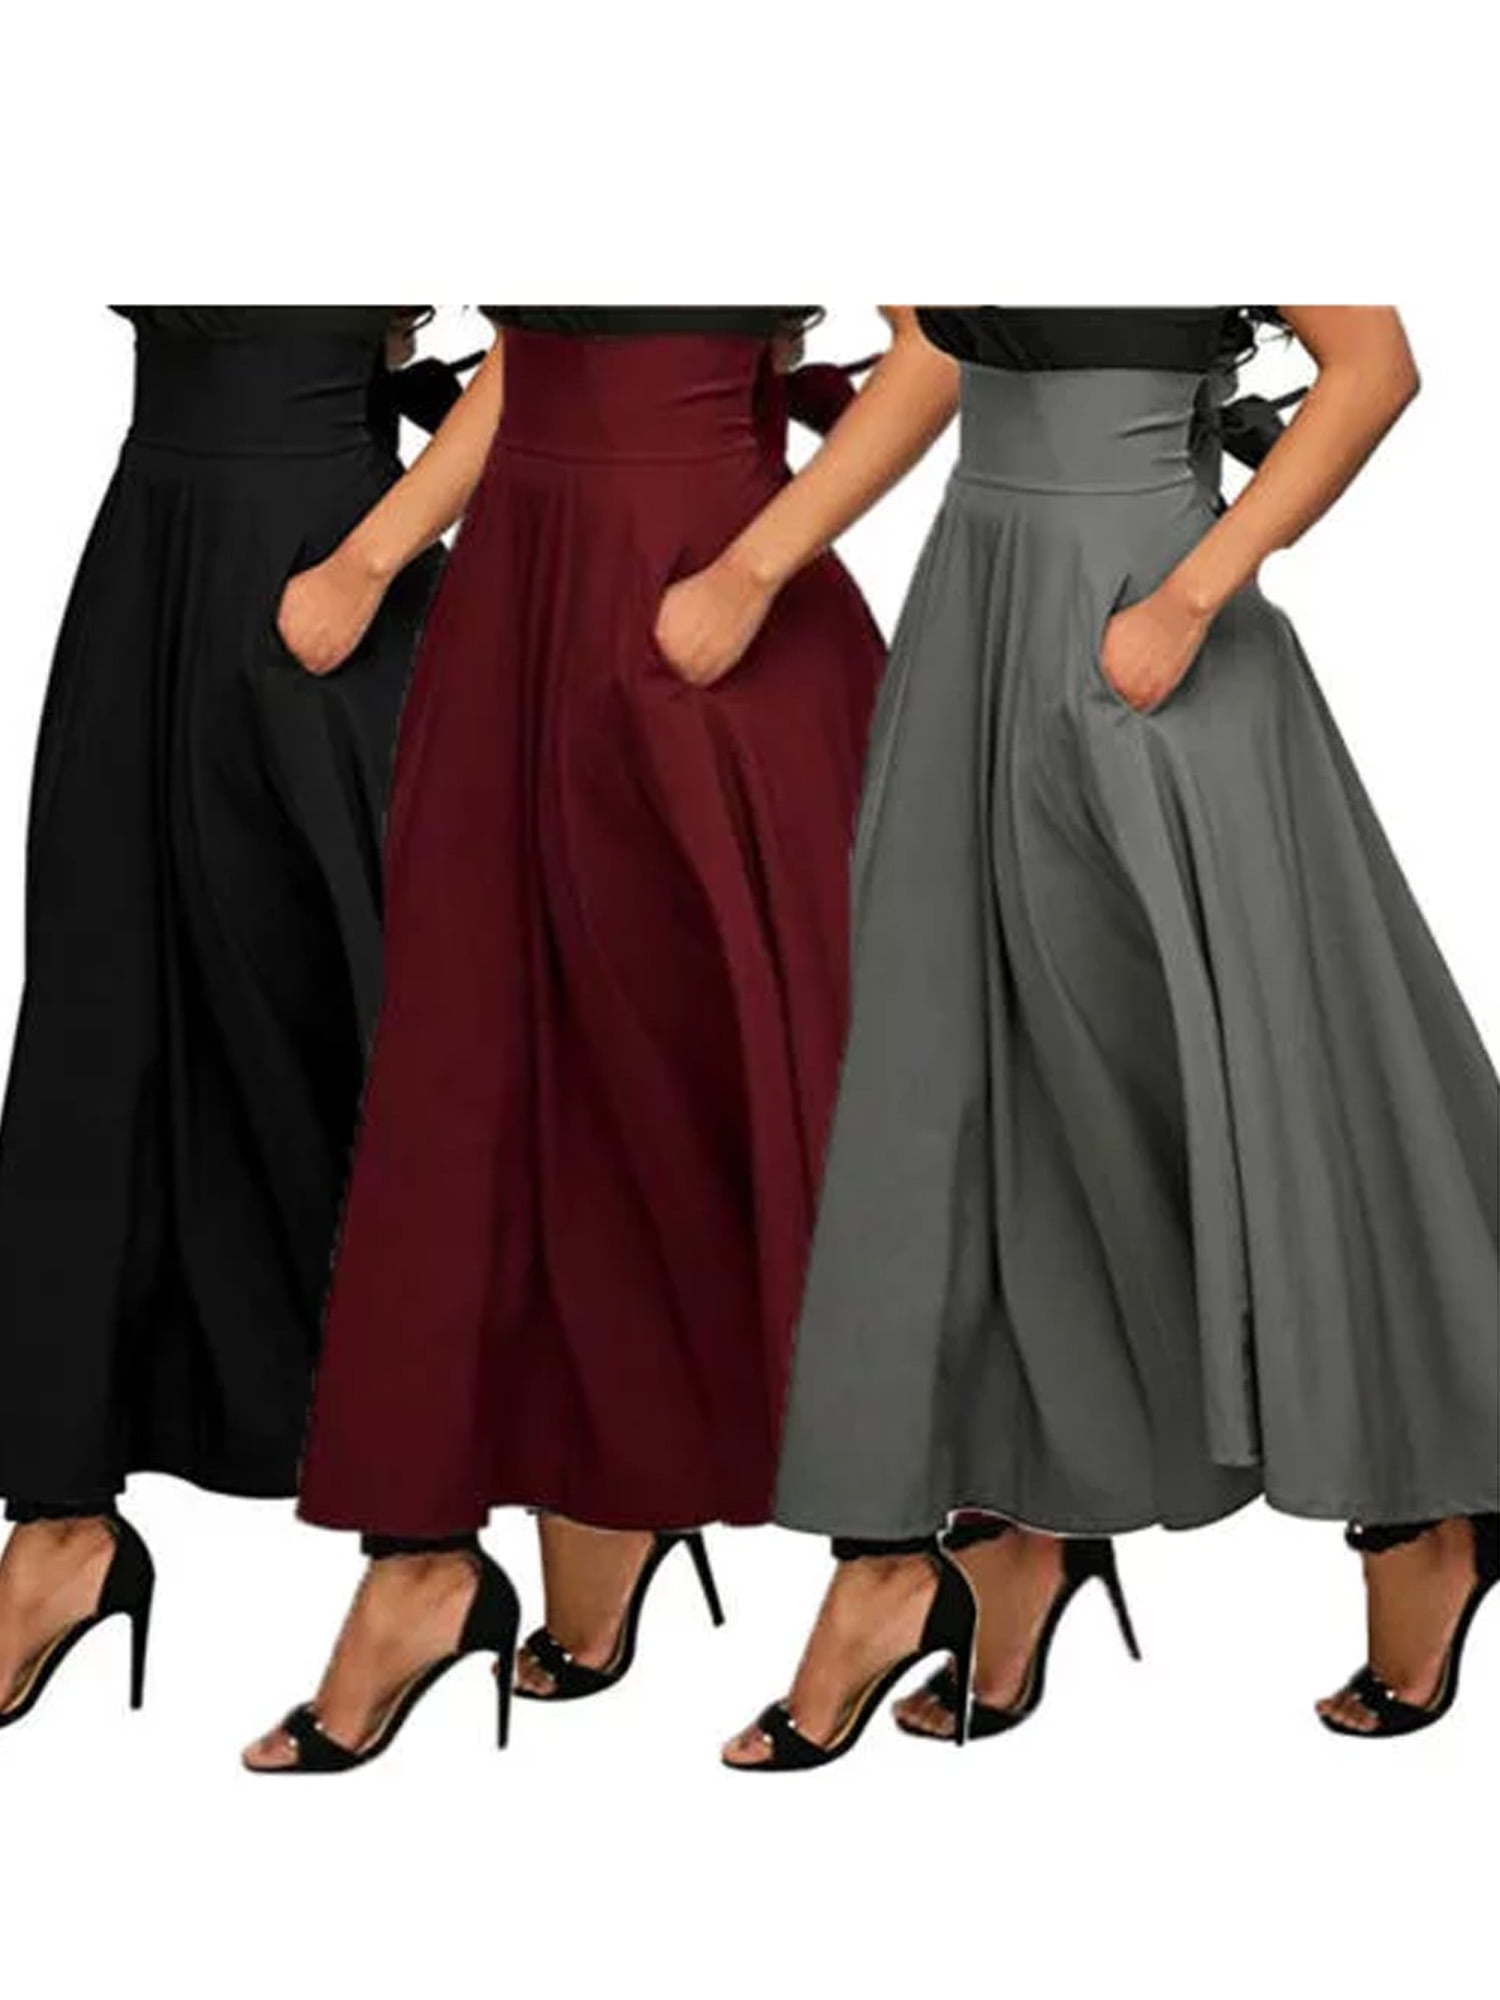 dress skirts